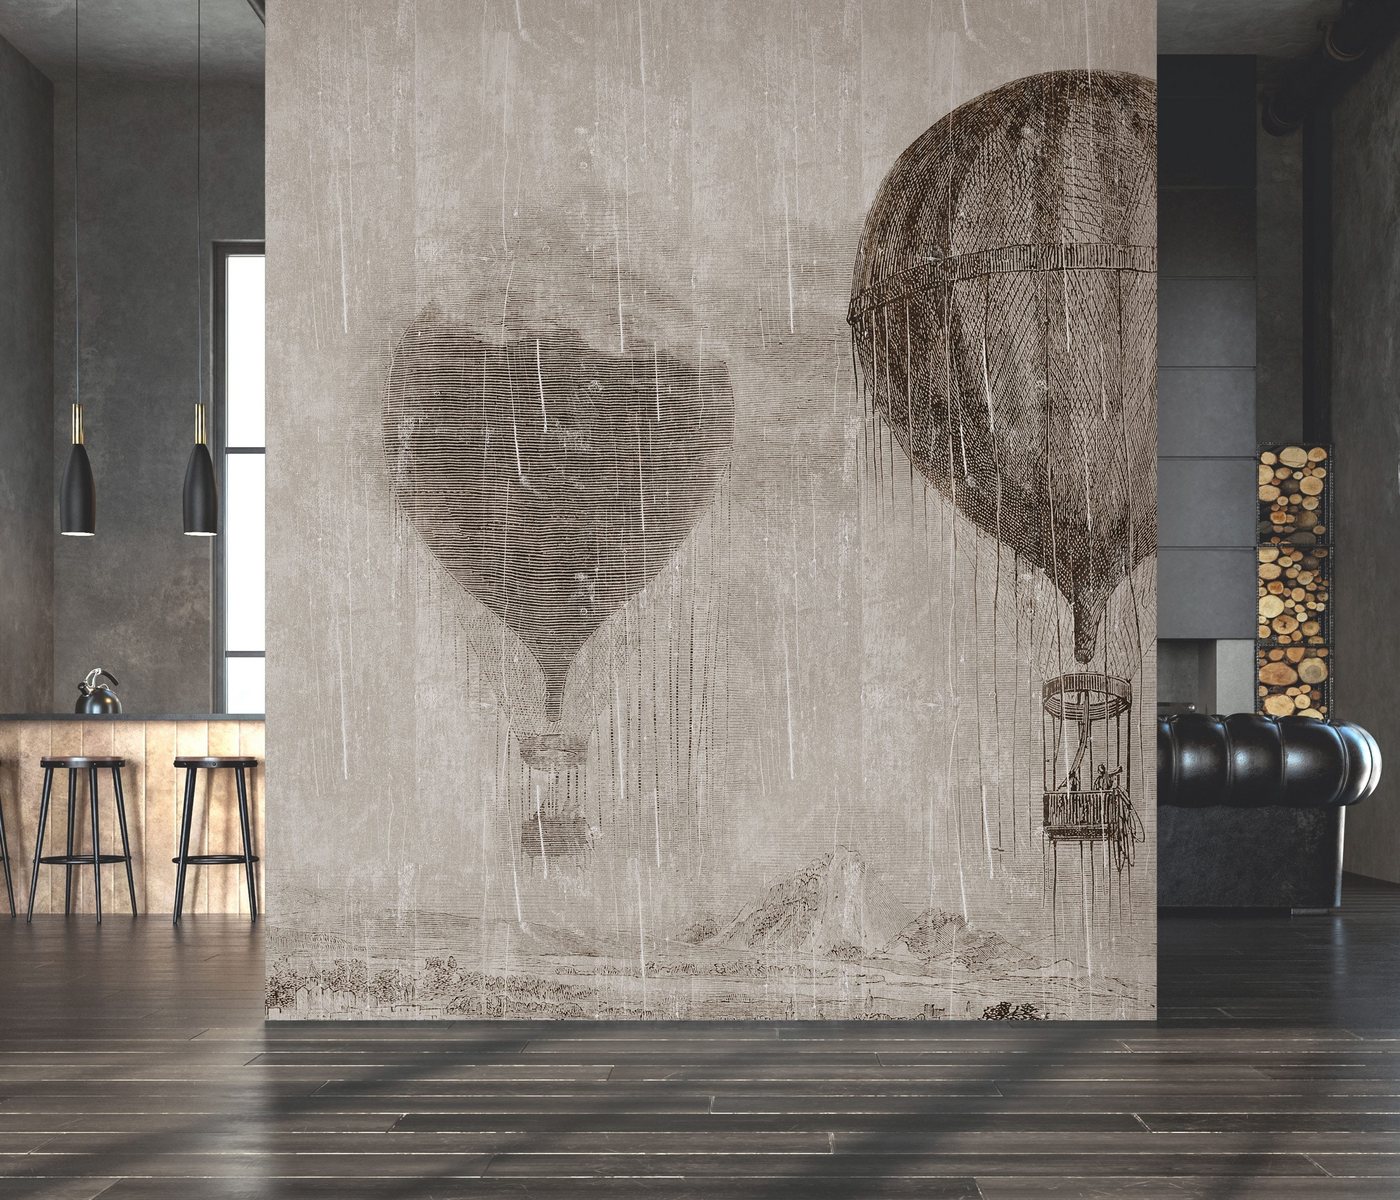 Newroom Vliestapete, [ 3 x 2,7 m ] großzügiges Motiv - kein wiederkehrendes Muster - Fototapete Wandbild Heißluftballon Berge Regen Made in Germany von Newroom